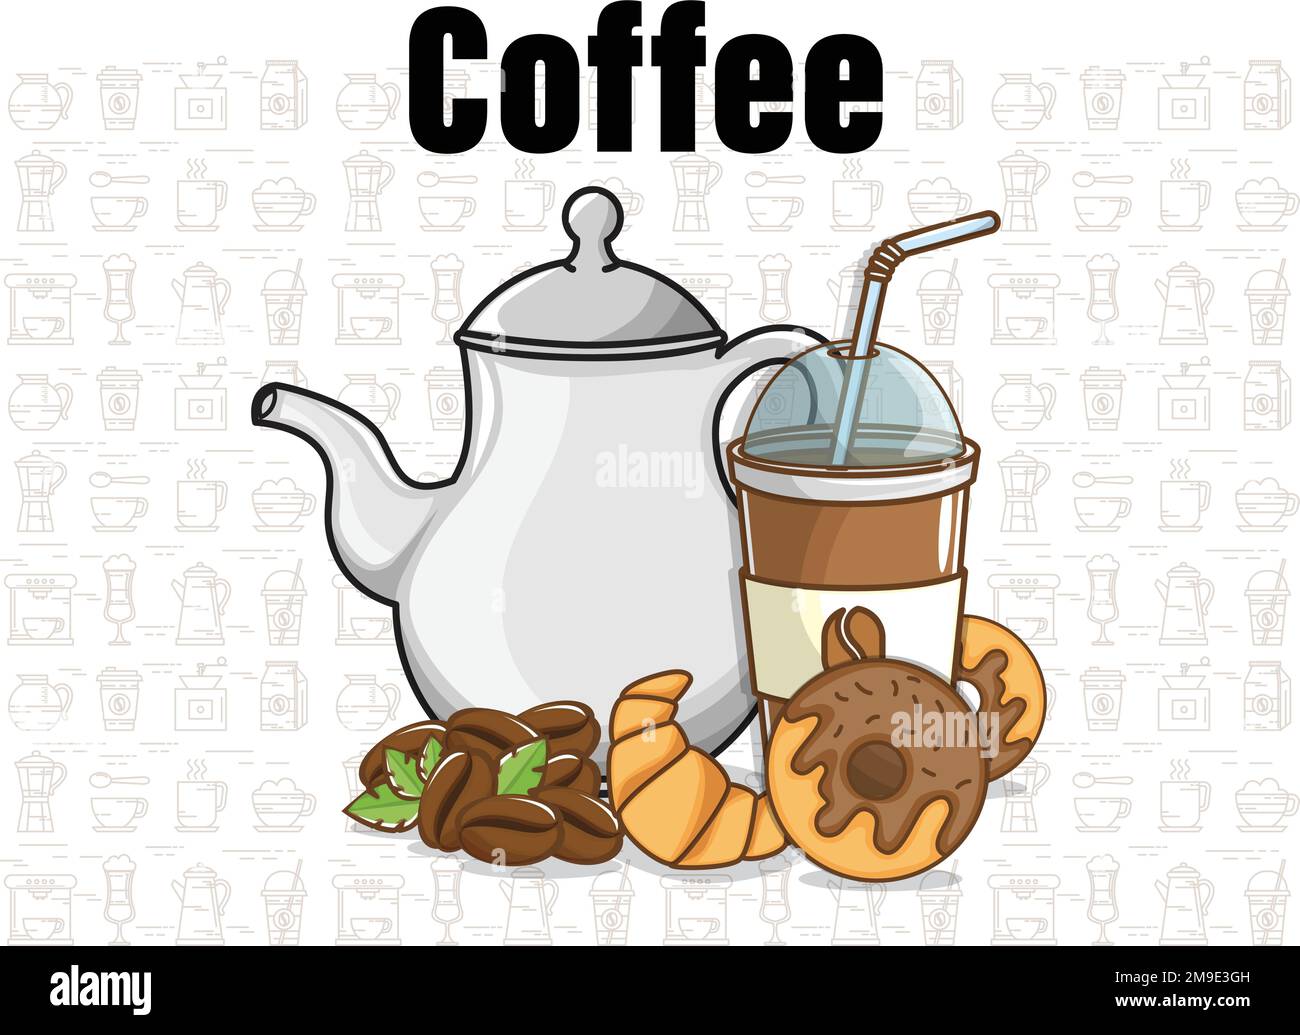 Kaffee kalter Kaffee Tee kalter Tee Bohnen Rinder Cockies Tee Set Kaffee Kaffeeset Kaffeebohne Getränk Löffel Koffein Becher Glas Stock Vektor